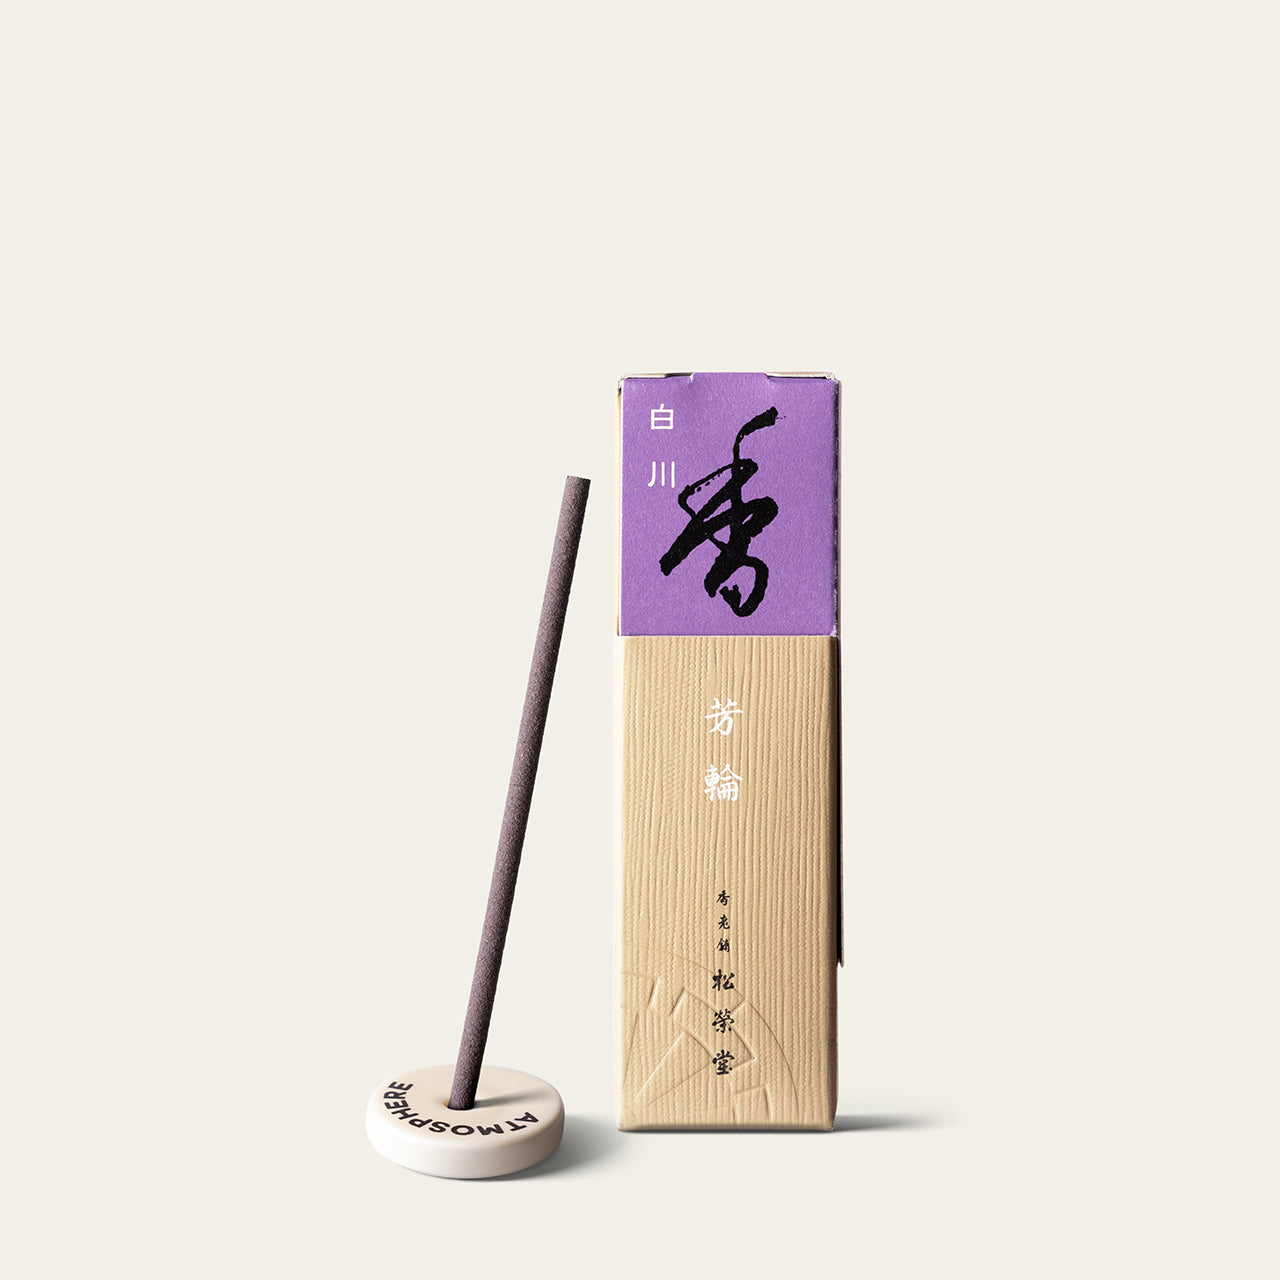 Shoyeido Horin White River Shirakawa Japanese incense sticks (20 sticks) with Atmosphere ceramic incense holder